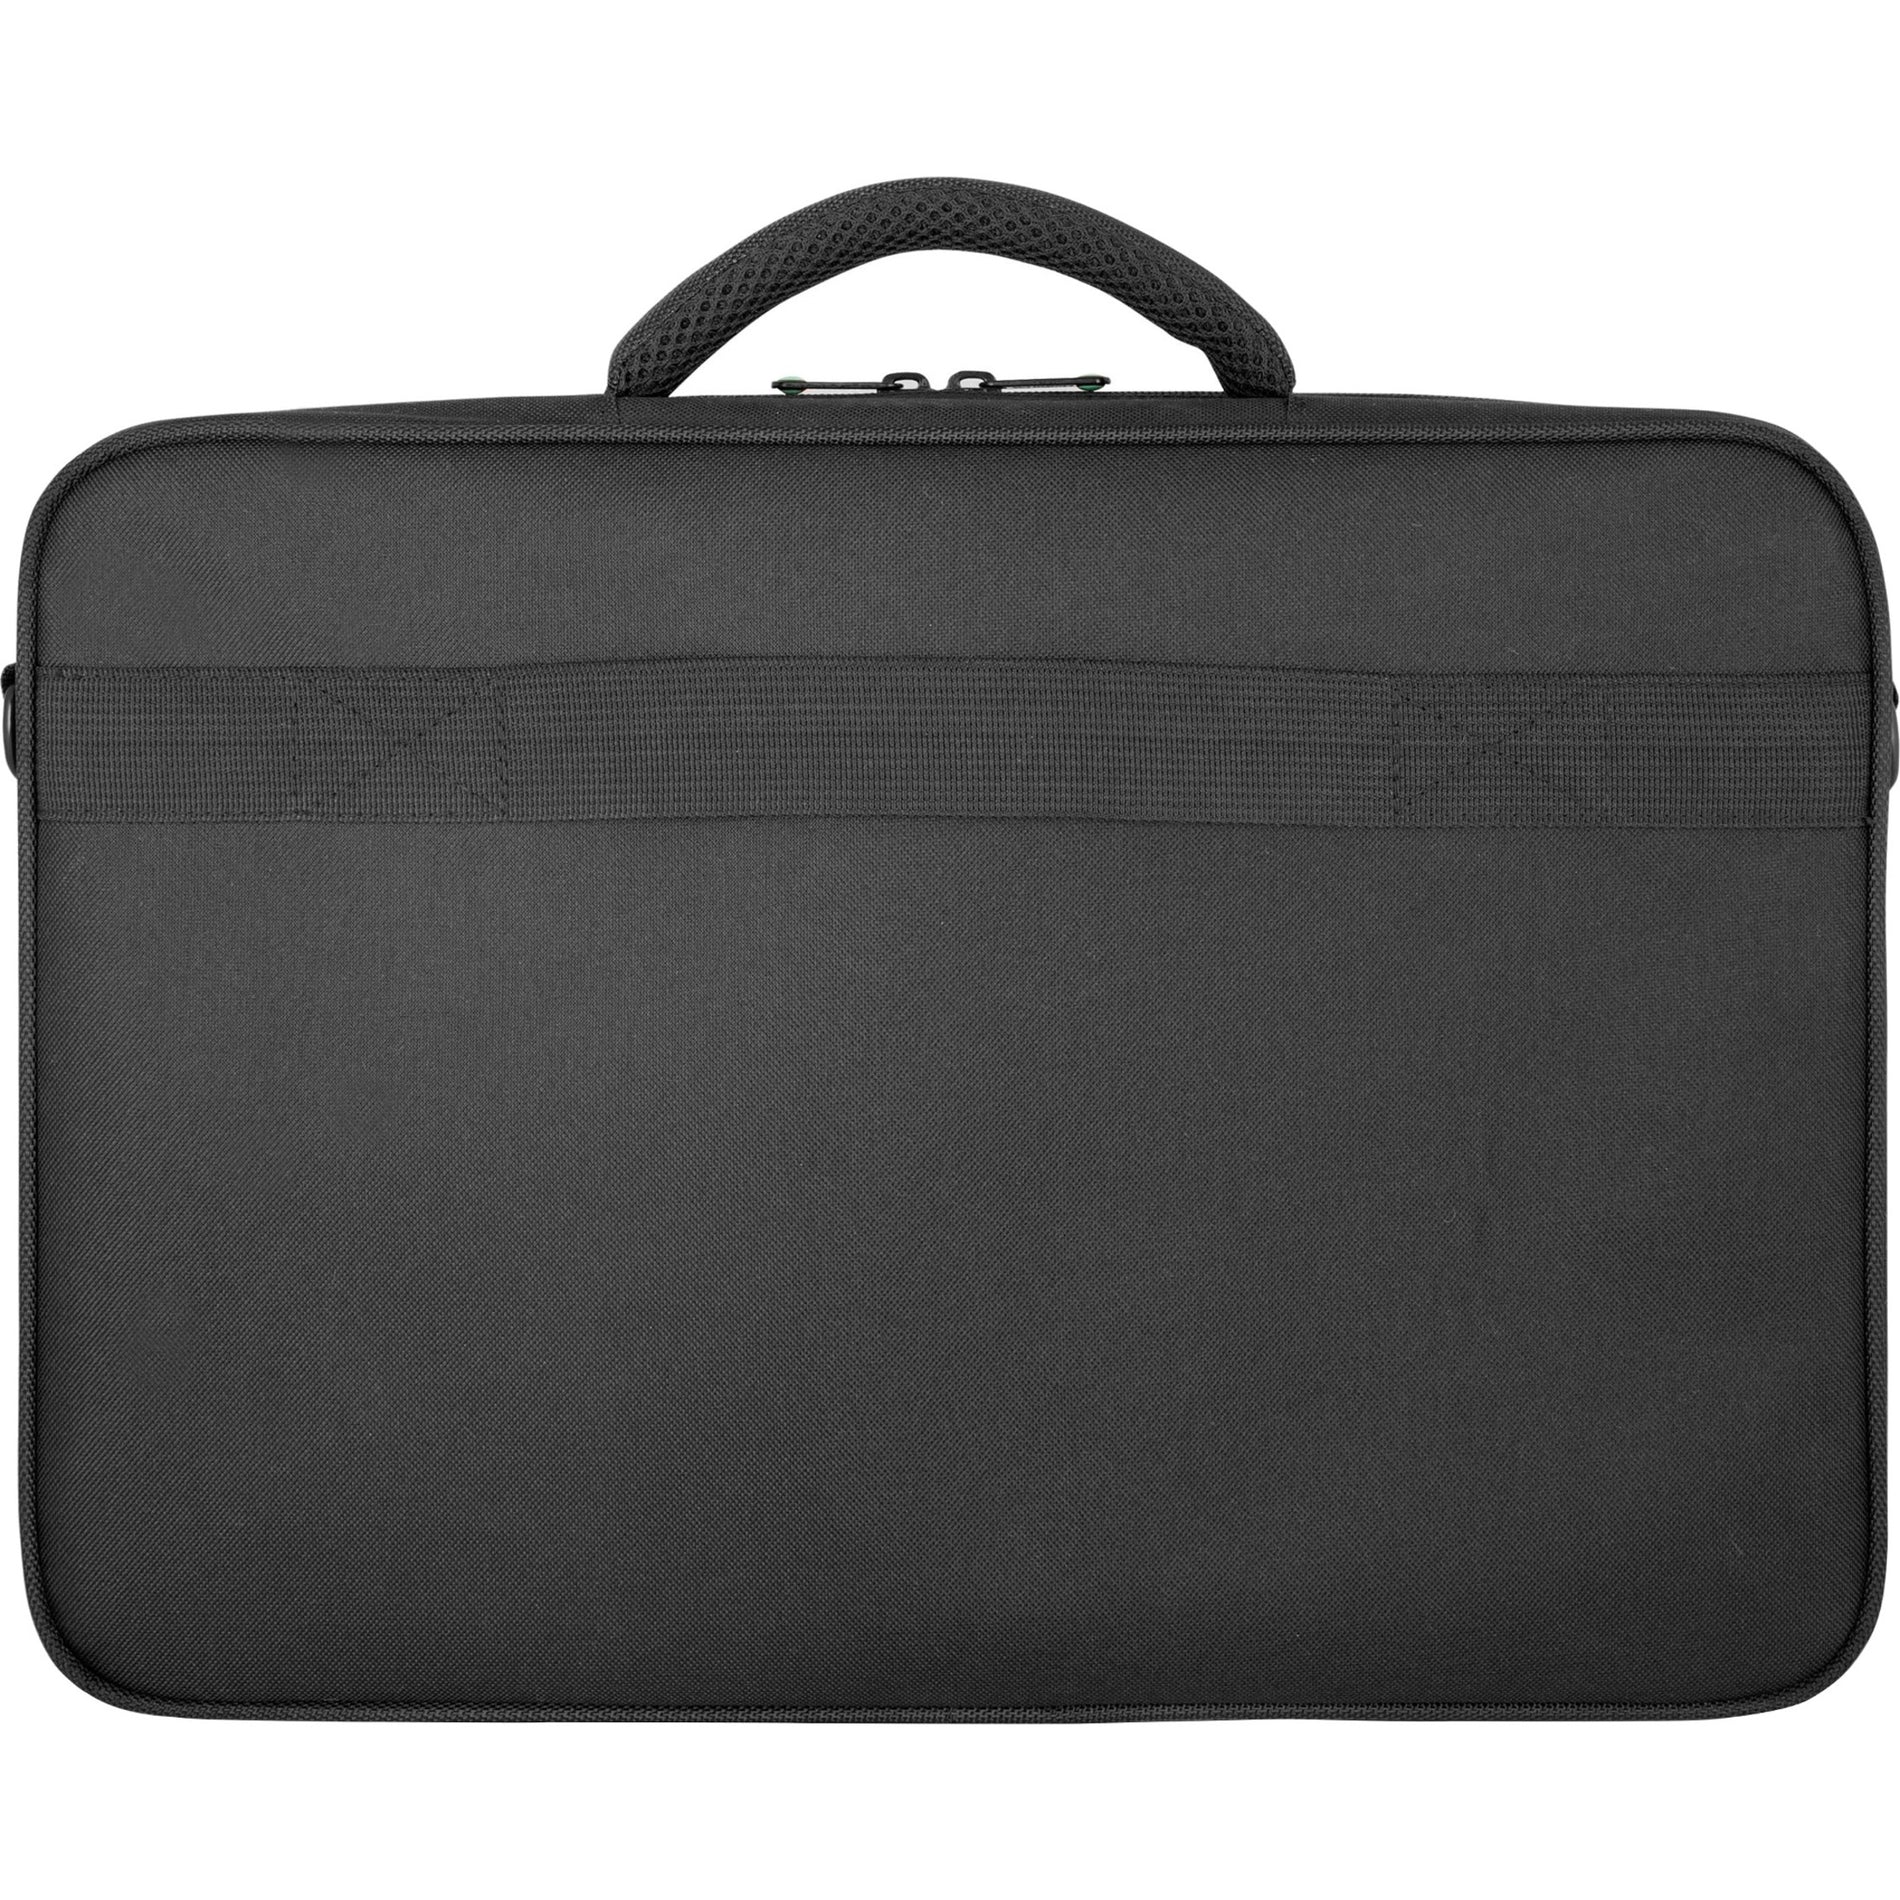 Urban Factory MXC17UF MIXEE Clamshell Case 17.3" Notebook, Black - Drop Resistant, Water Resistant, Lifetime Warranty